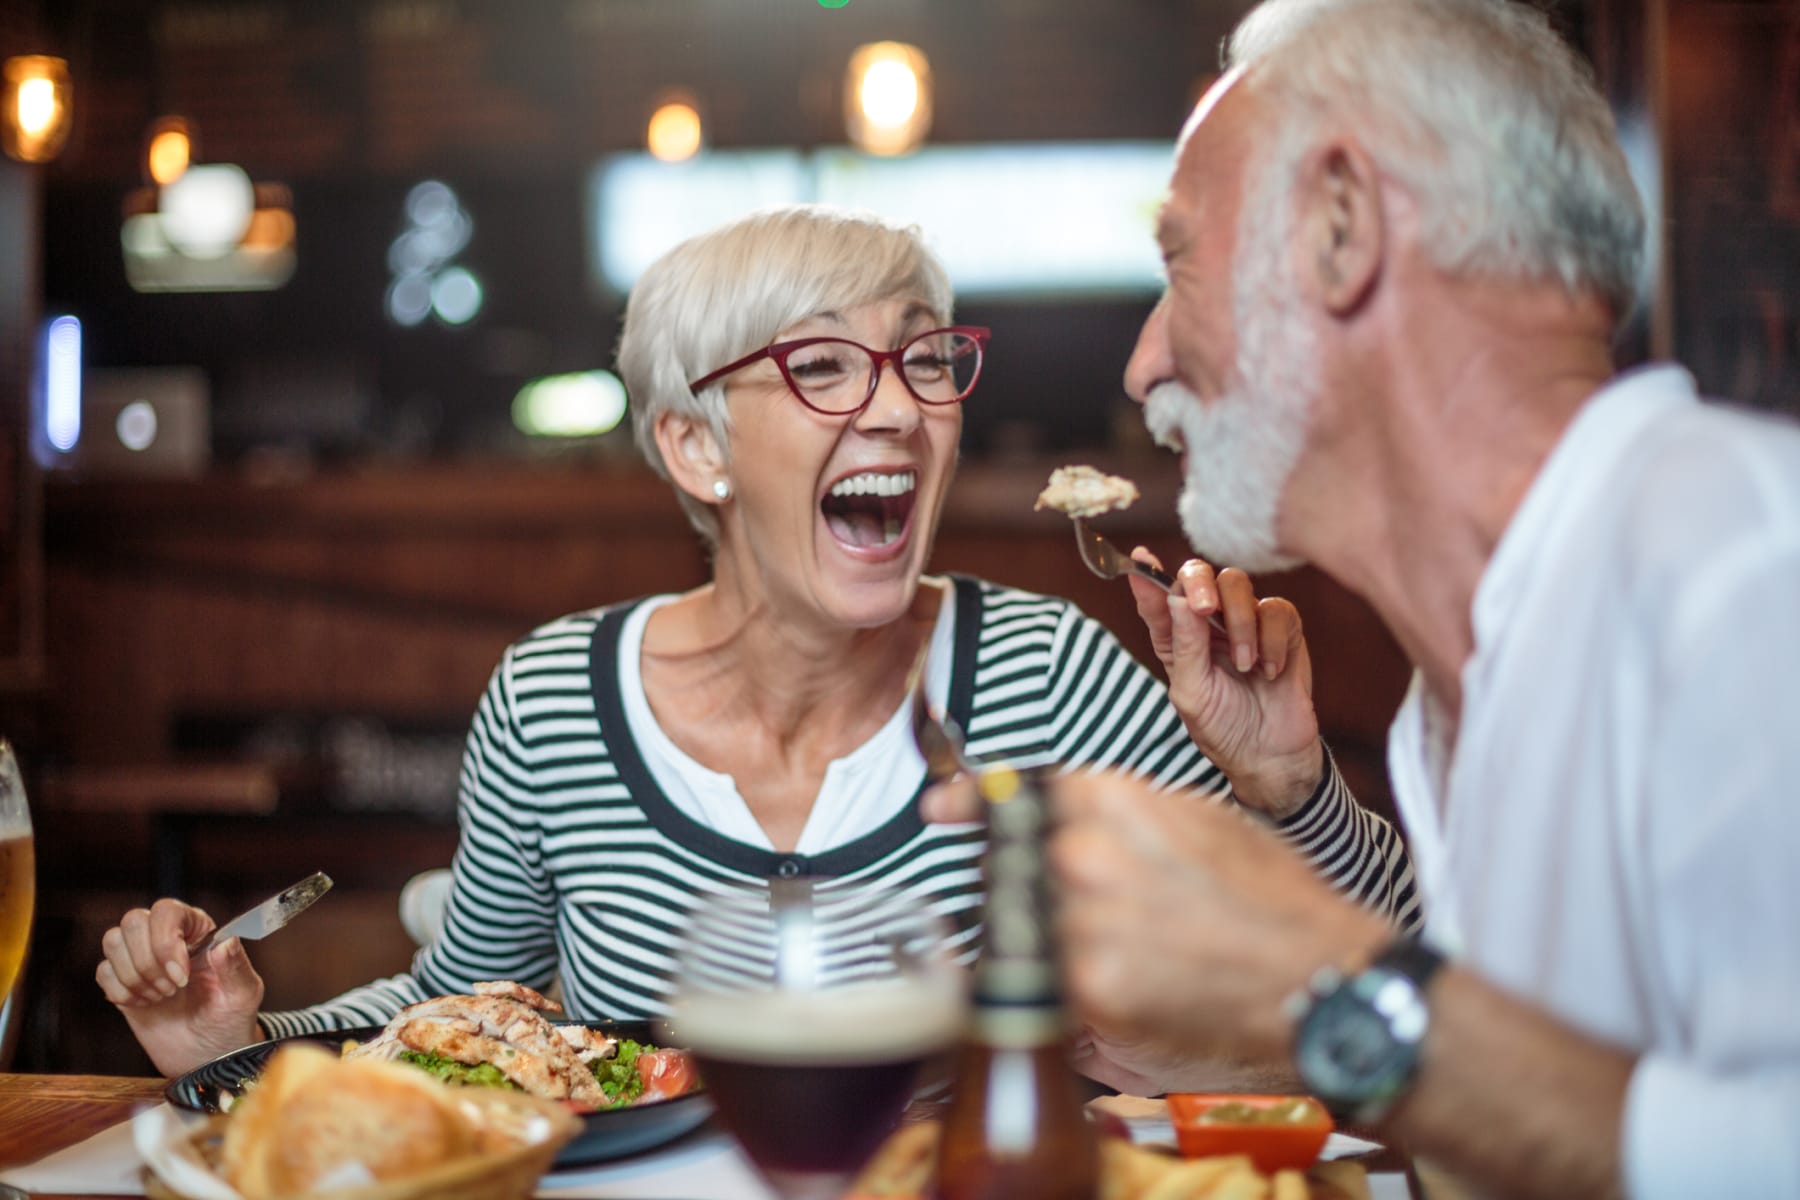 An older couple enjoys dinner together out at a restaurant.